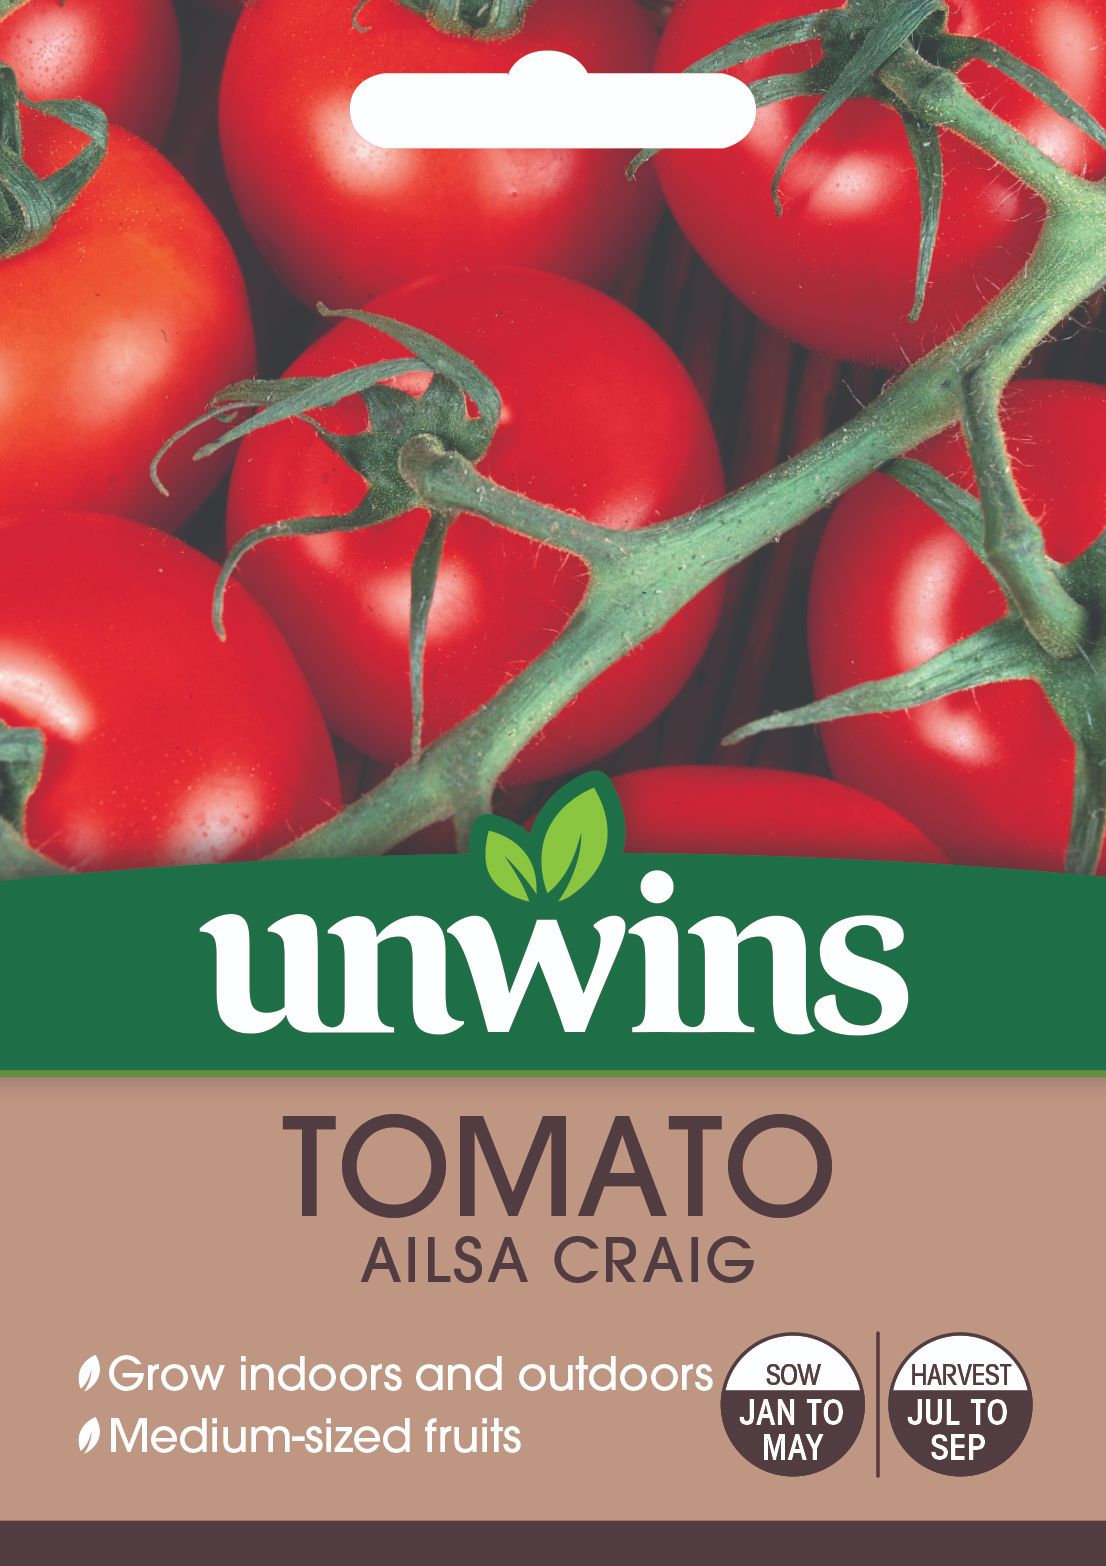 Tomato (Round) Ailsa Craig